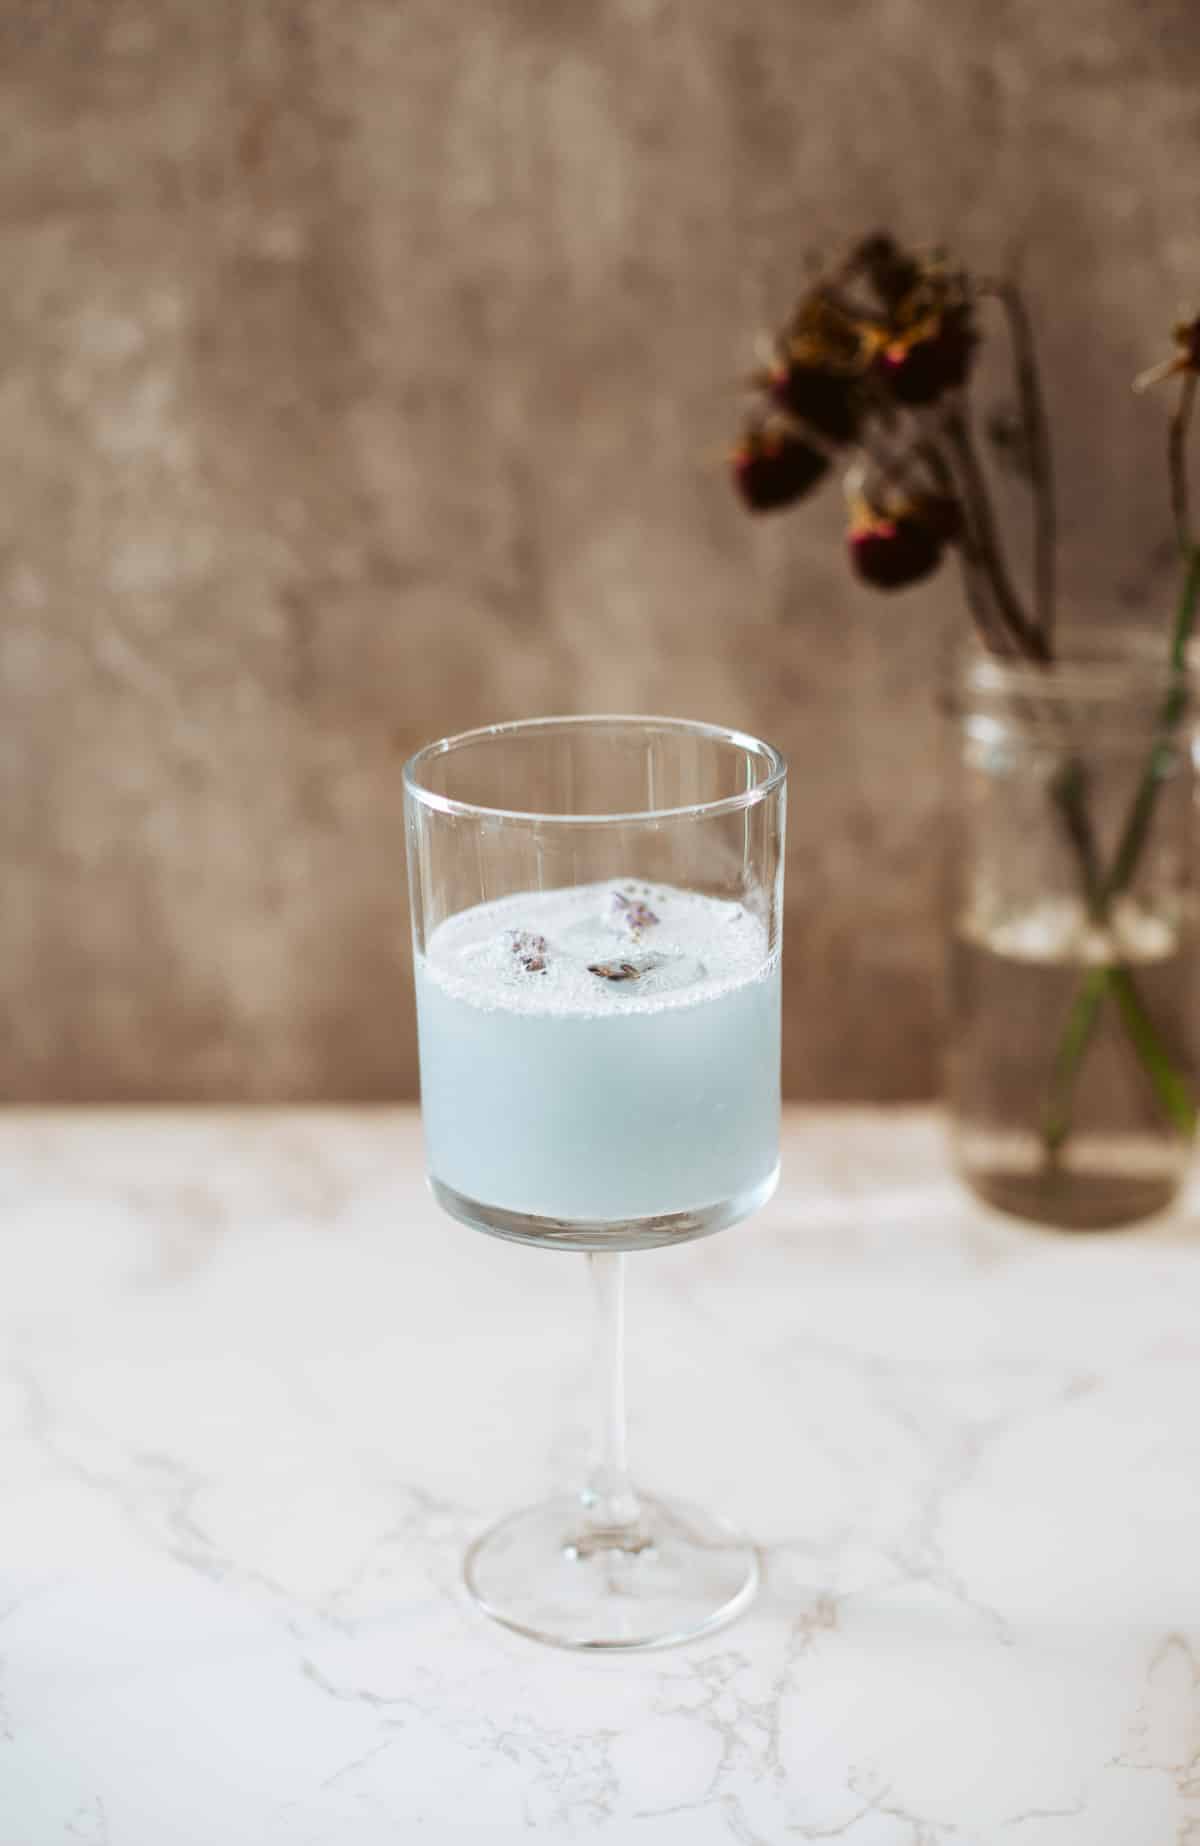 Empress arctic puffin (blue drink)